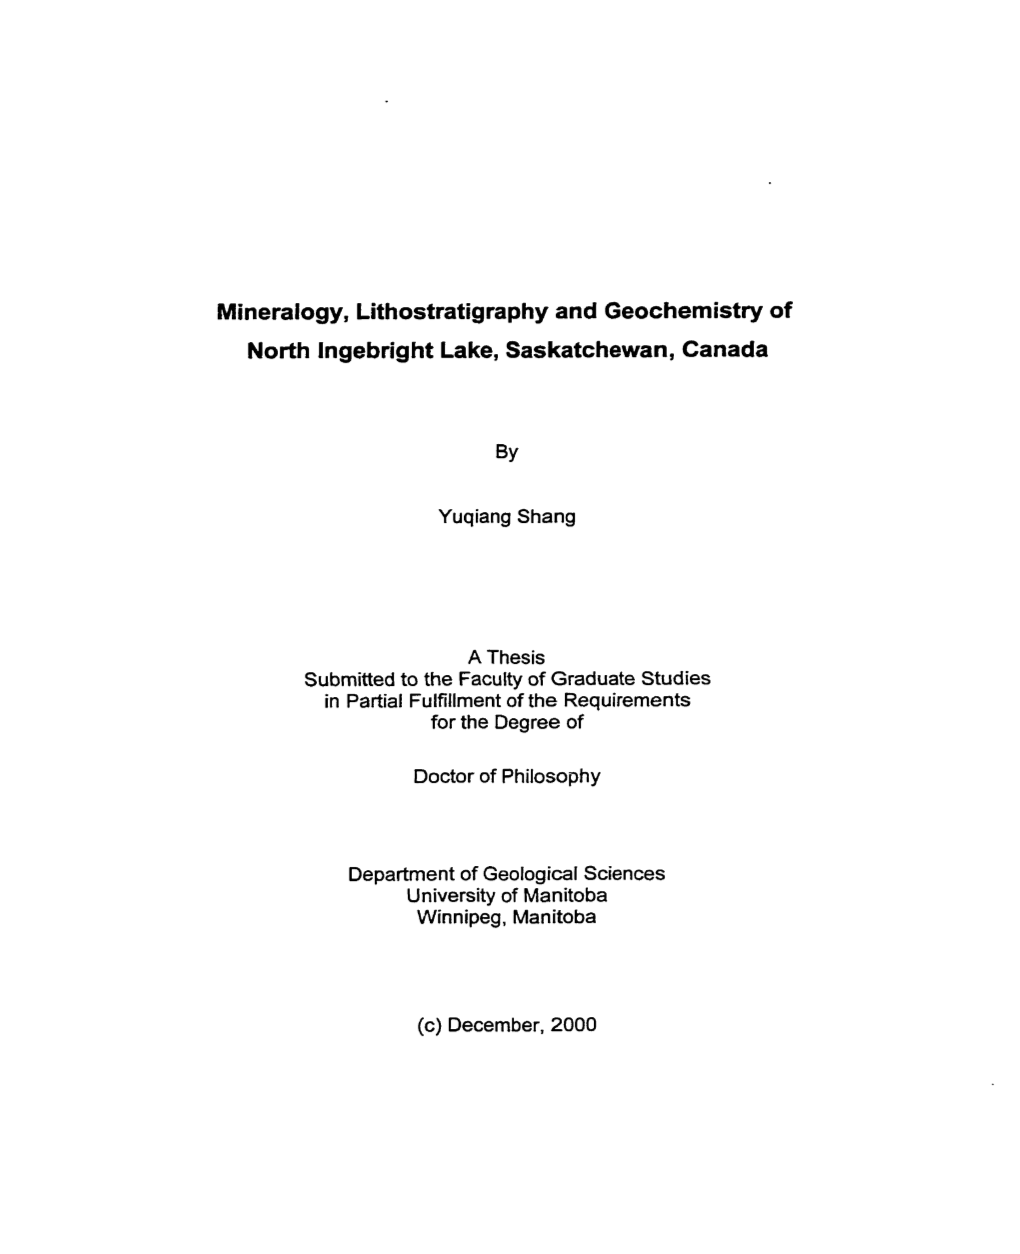 Mineraiogy, Lithostratigraphy and Geochemistry of North Lngebright Lake, Saskatchewan, Canada